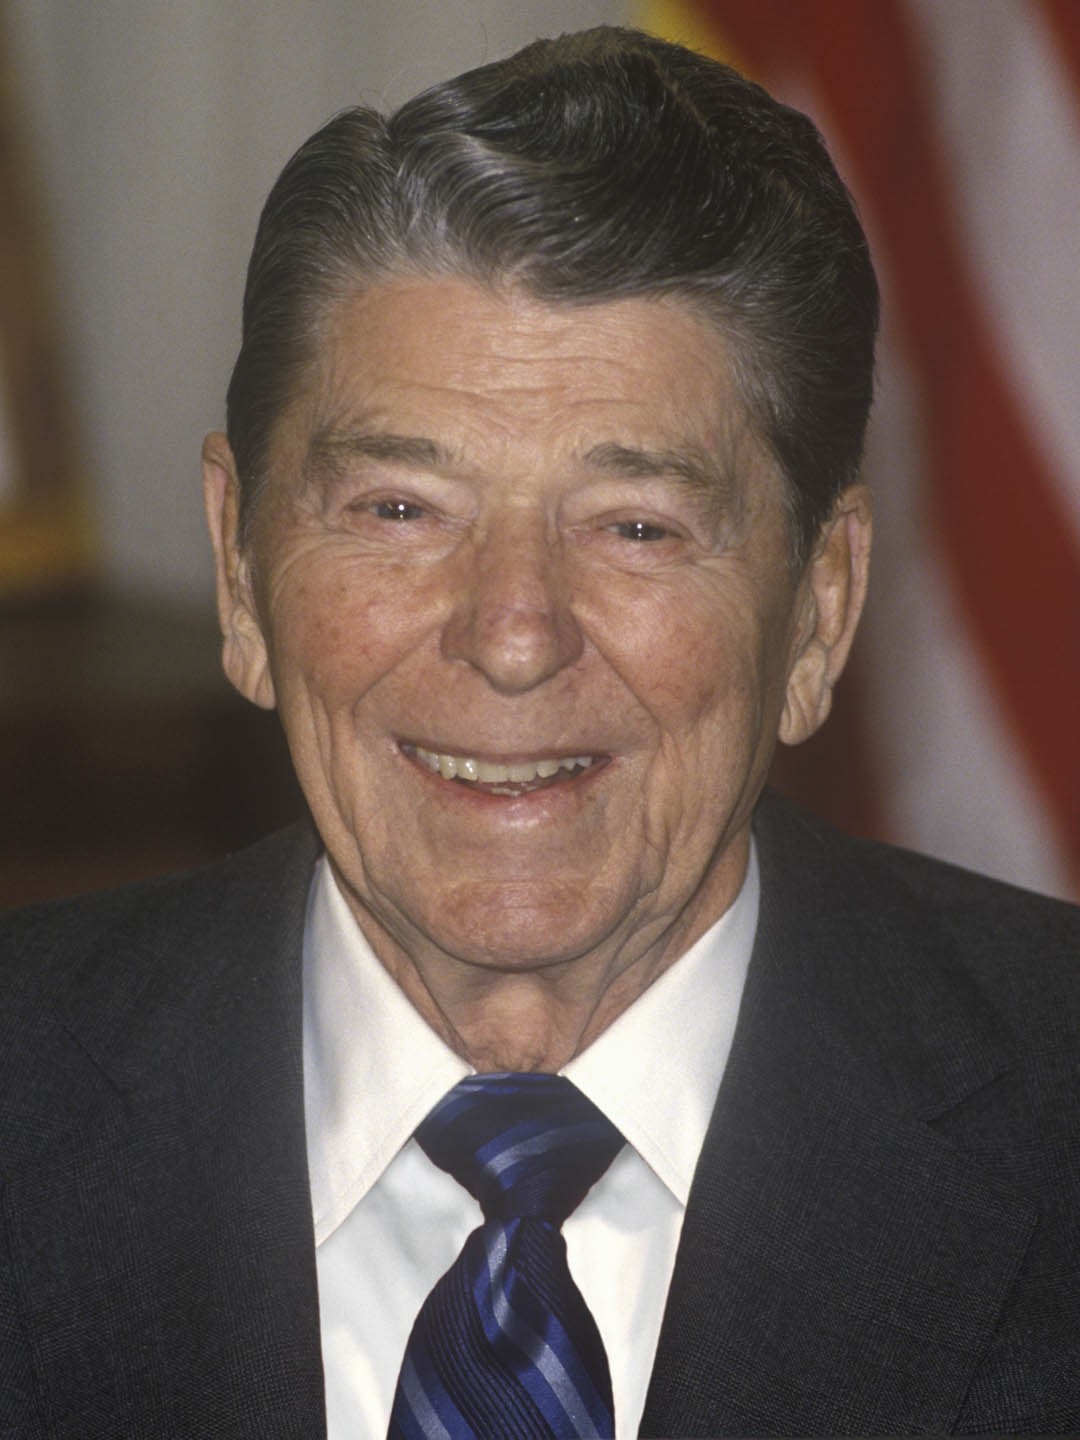 Ronald Reagan is not dead